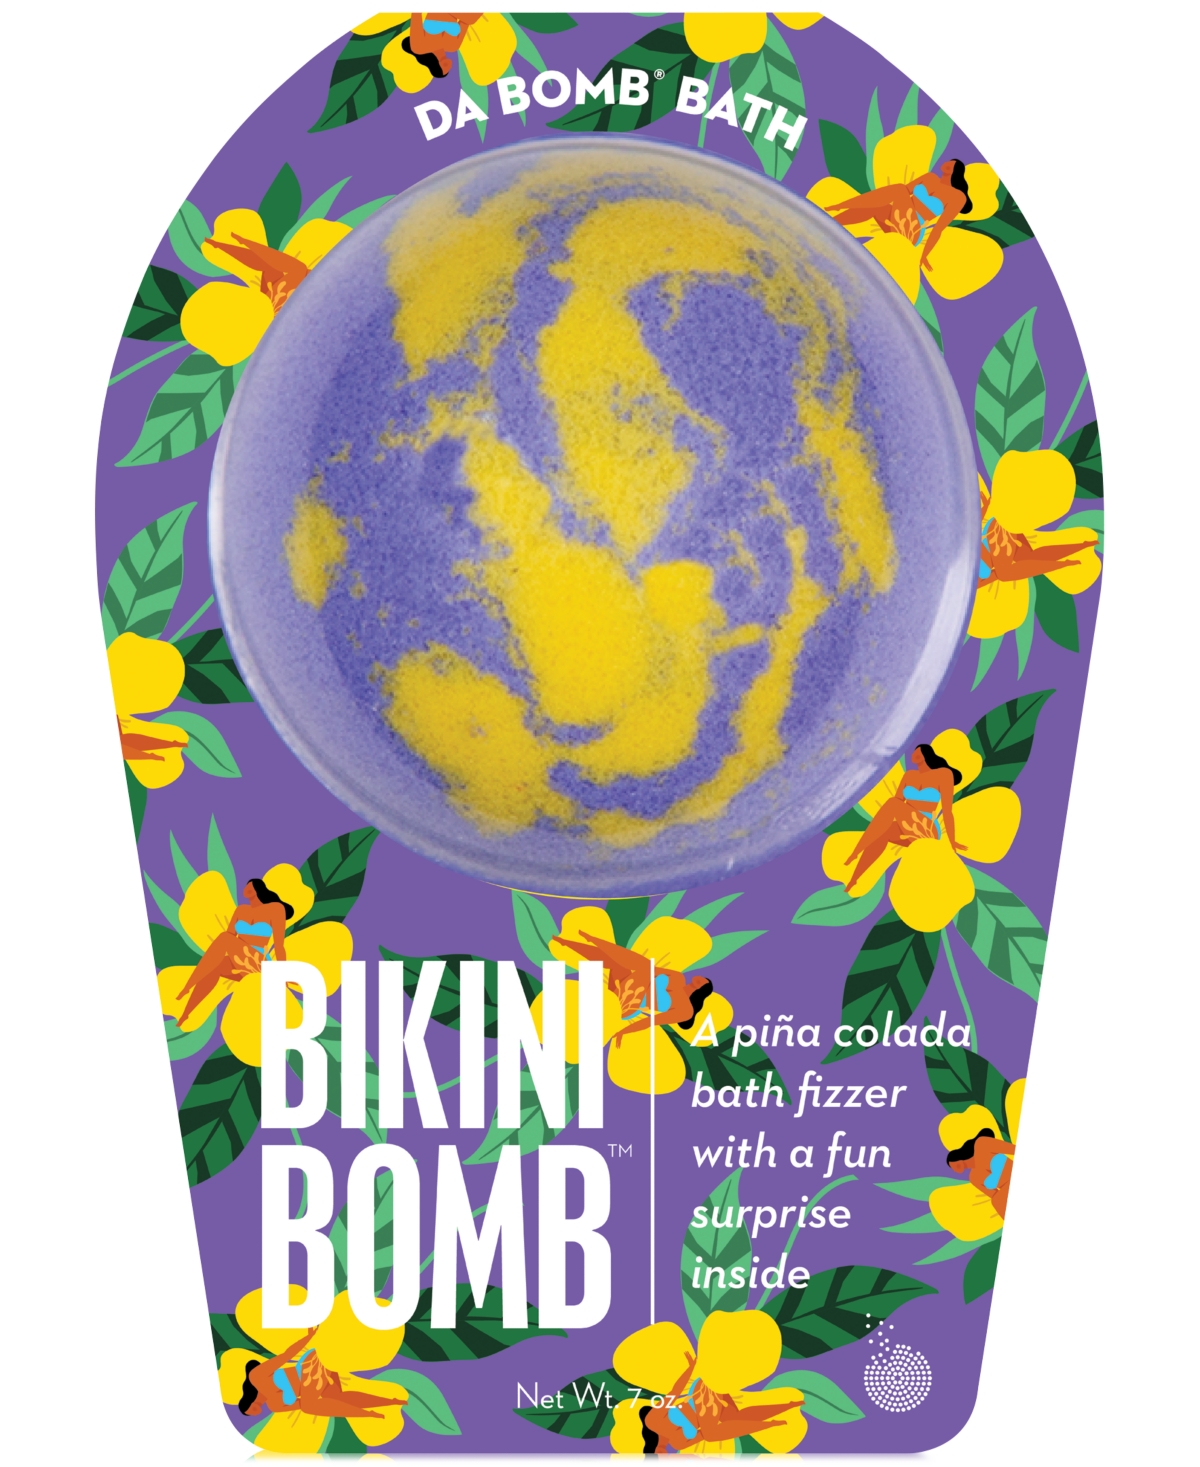 Da Bomb Bikini Bath Bomb, 7 Oz.